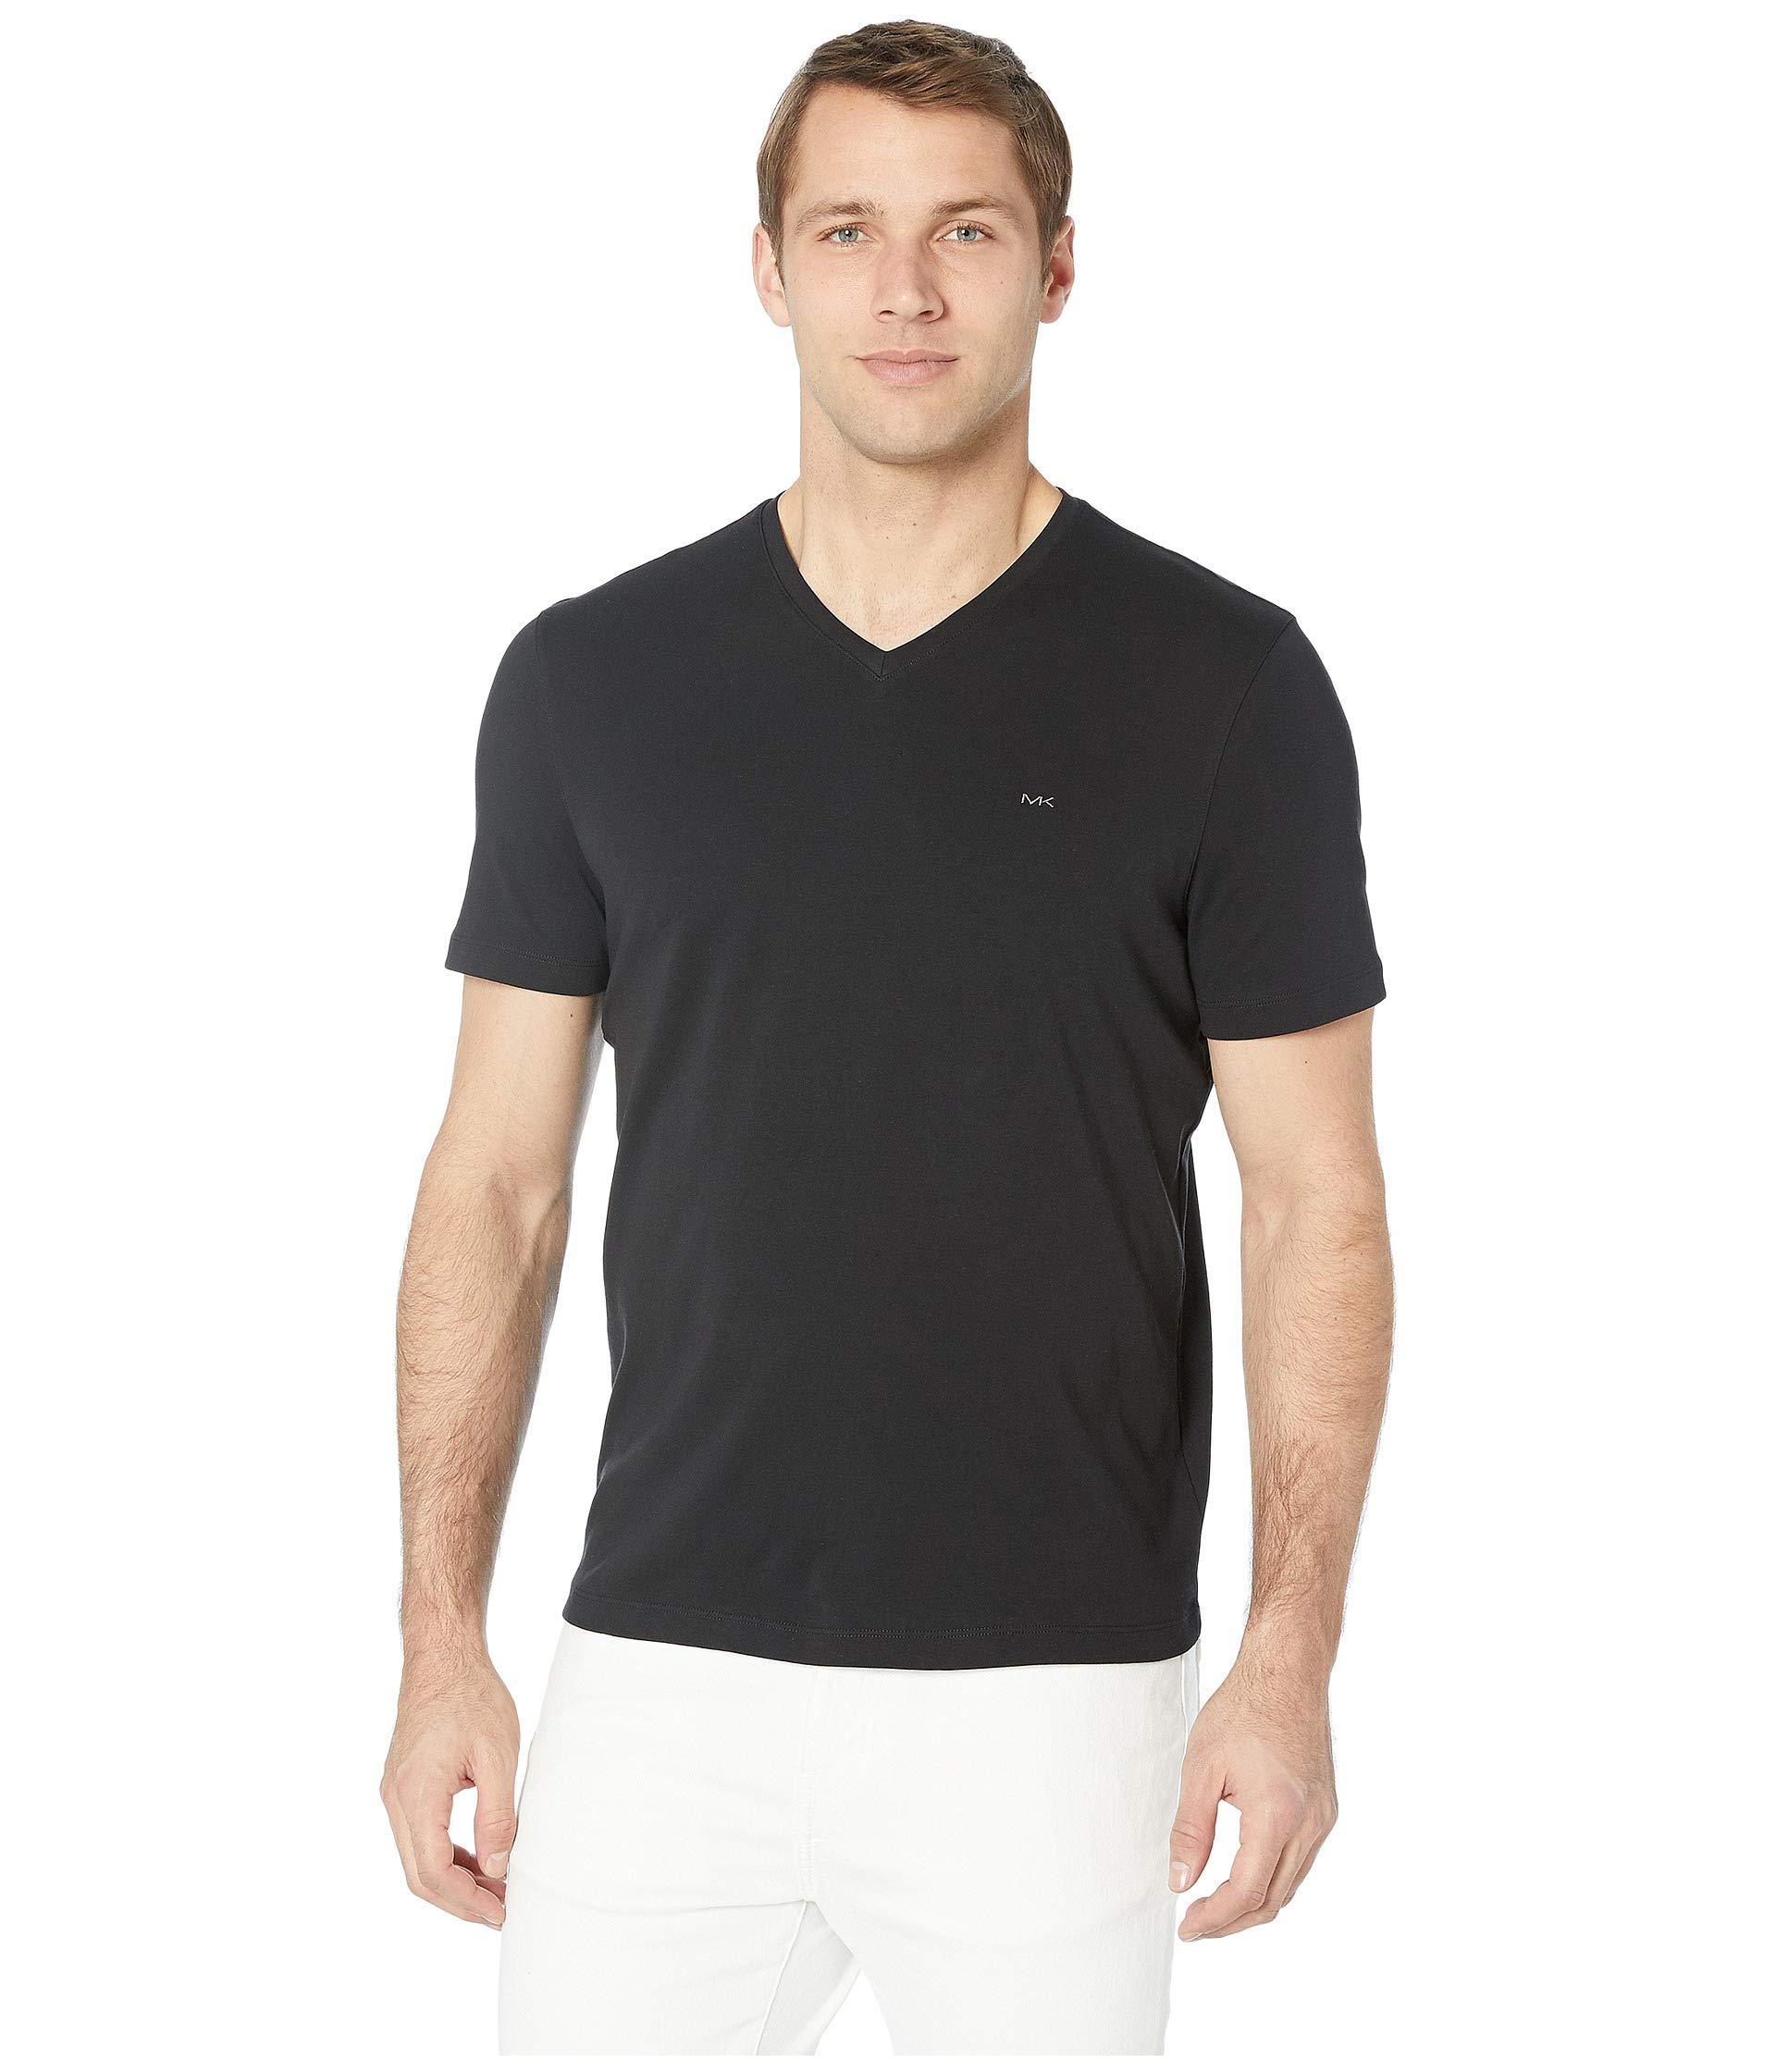 Michael Kors V-neck Liquid Cotton T-shirt in Black for Men - Save 24% ...